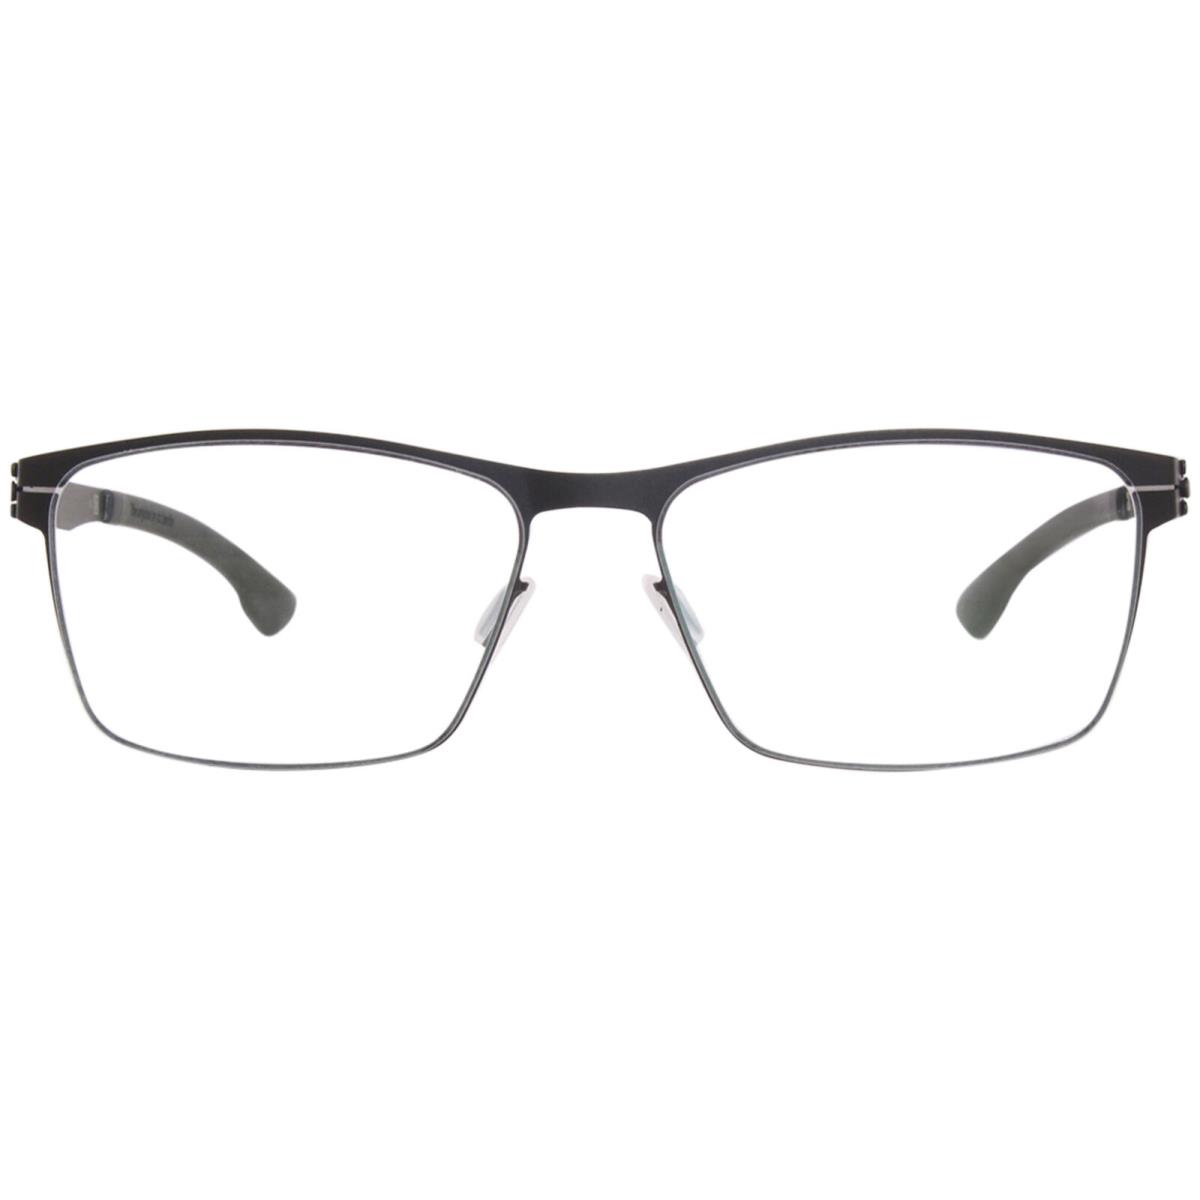 Ic Berlin Stuart L. Eyeglasses Frame Men`s Black Full Rim Square Shape 55mm